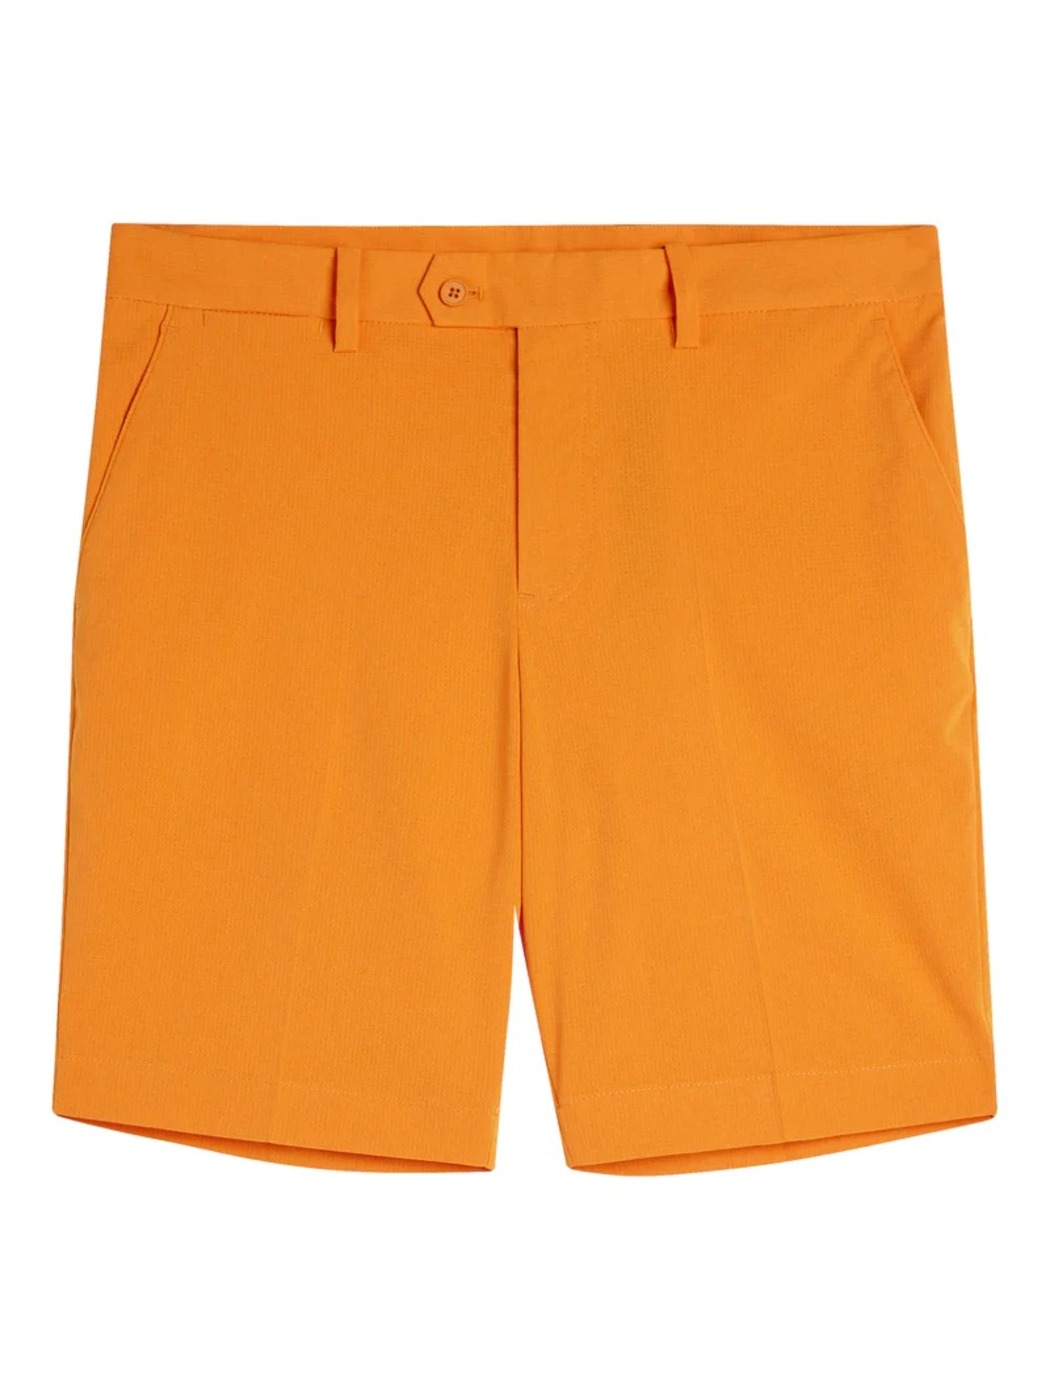 Jaylindberg SS23 Men&#039;s Golf Shorts Bent Shorts (Russet Orange)